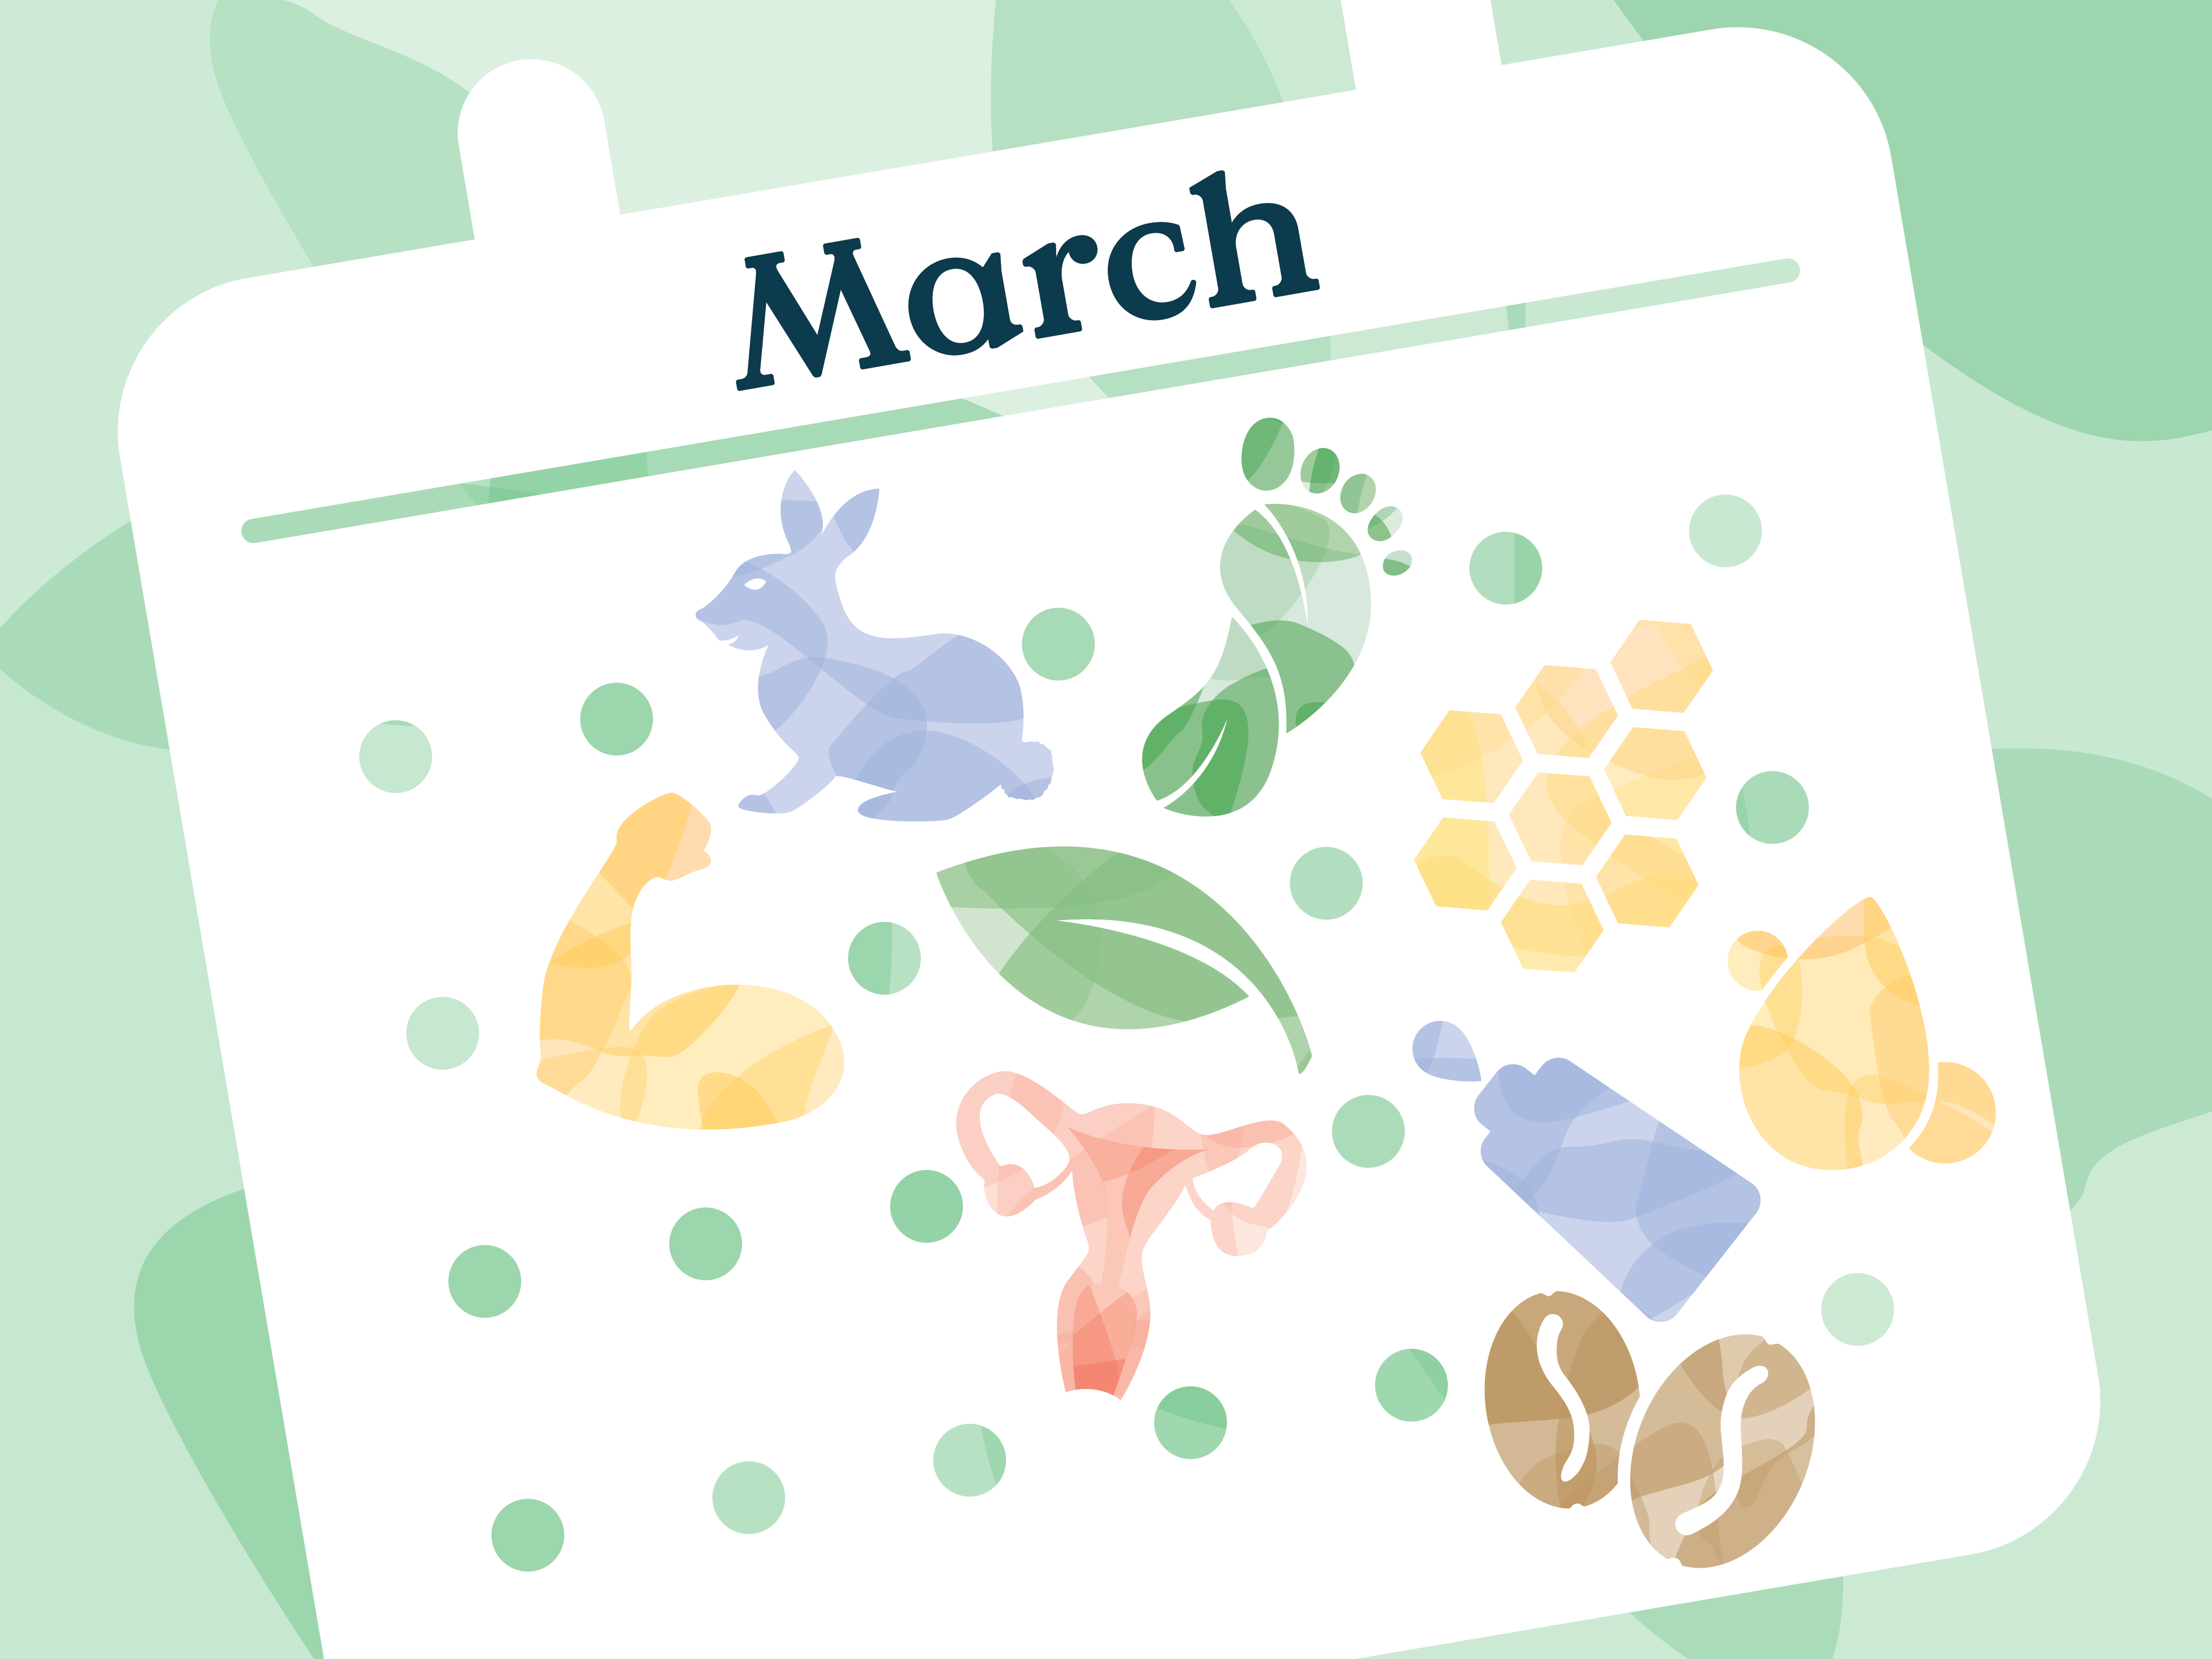 march holiday calendar